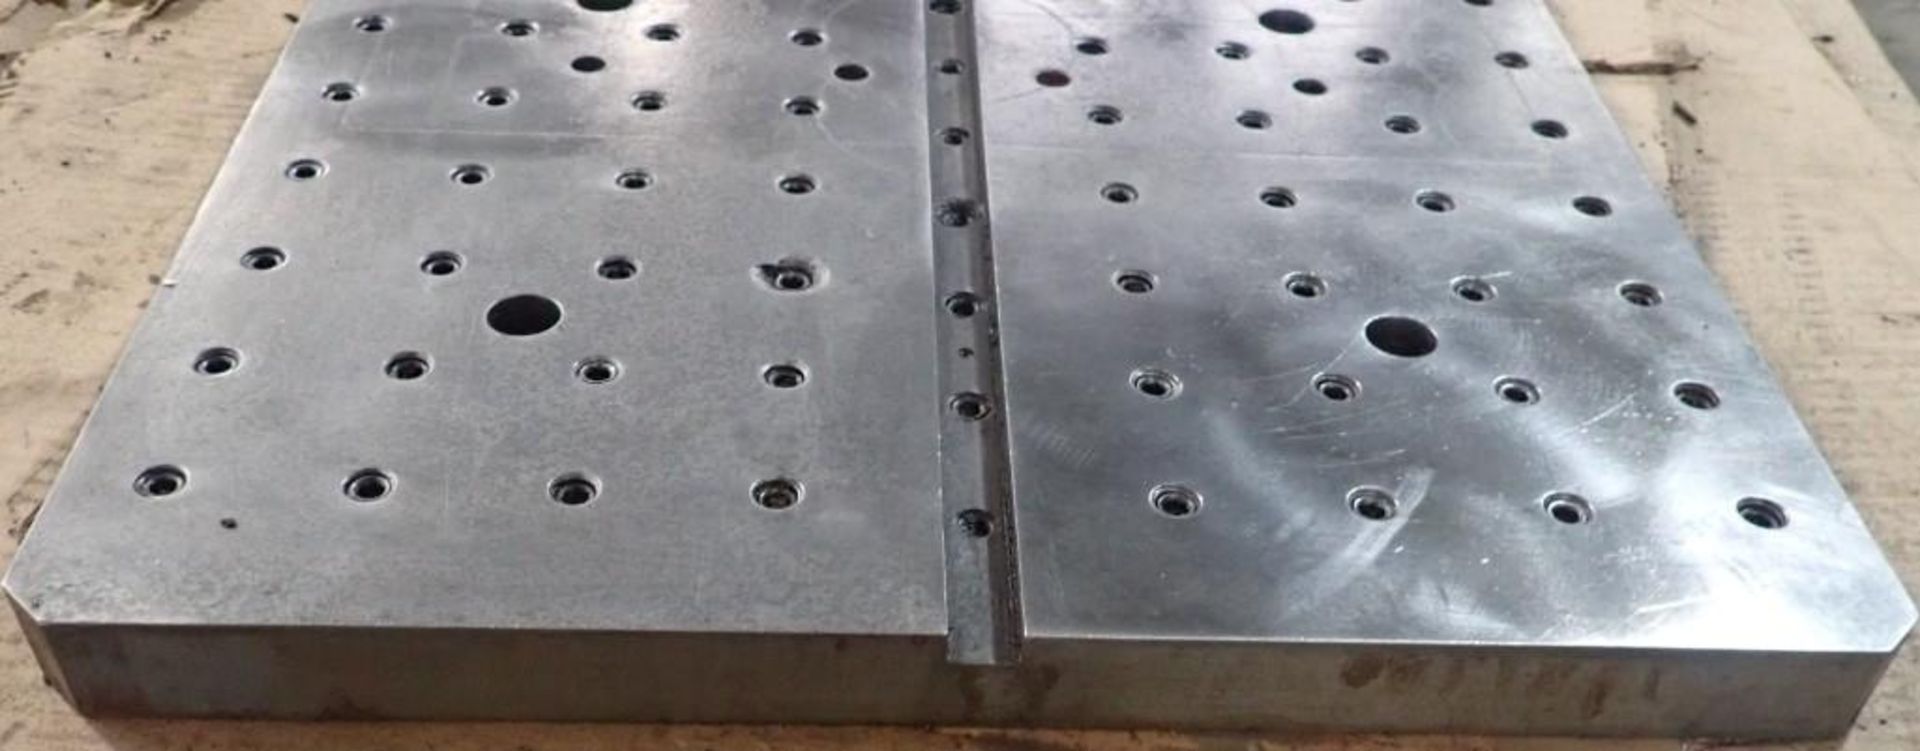 18" x 36" Steel Machining Sub Plate / Setup Table - Image 4 of 4